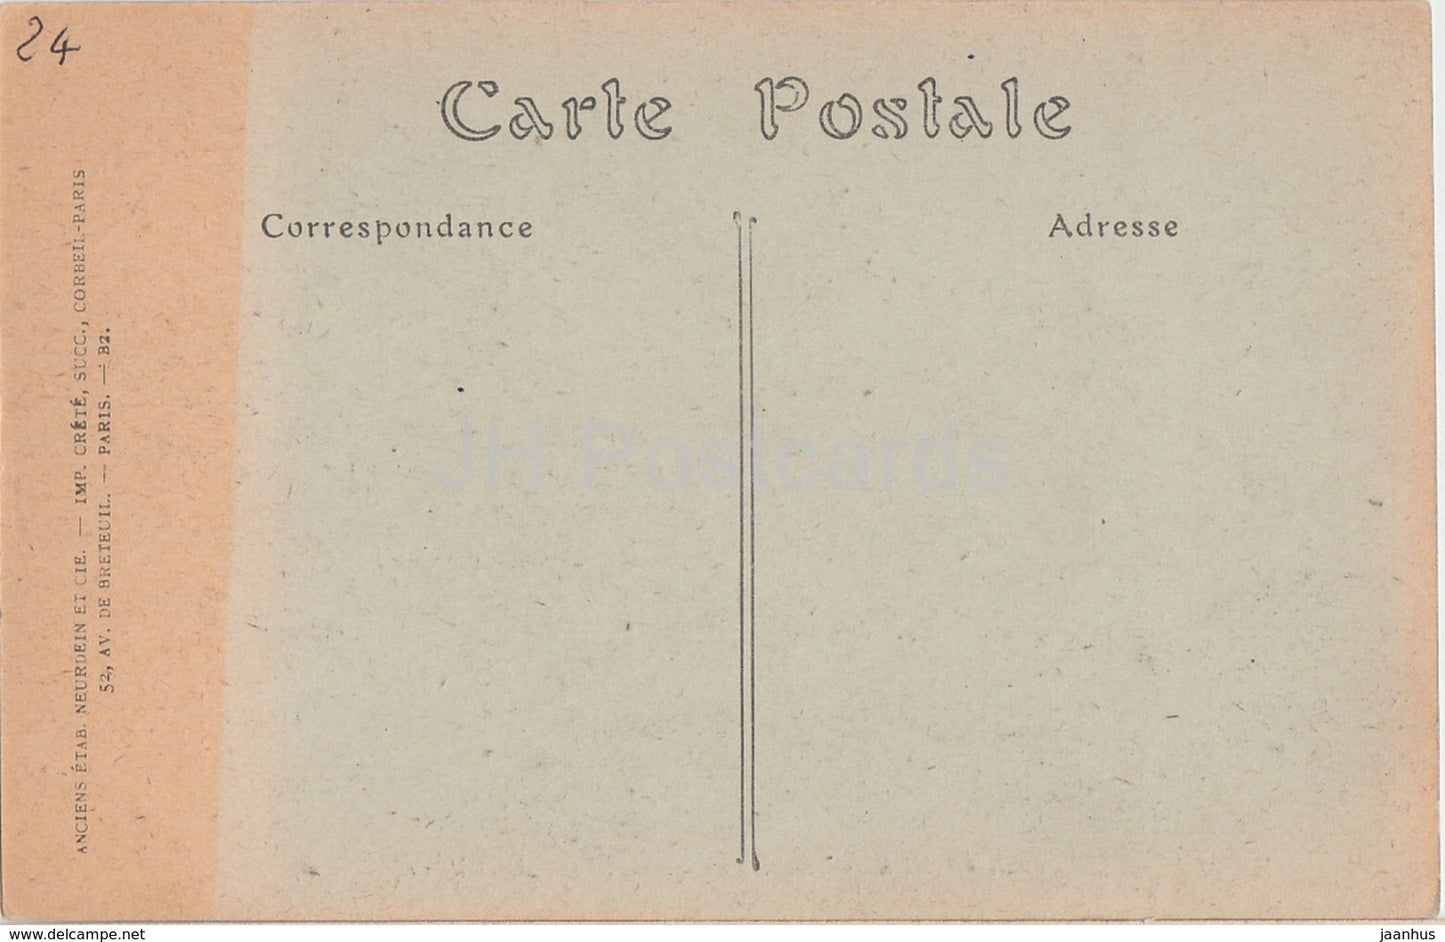 Perigueux - Basilique Saint Front - Le Choeur - cathedral - 140 - old postcard - France - unused